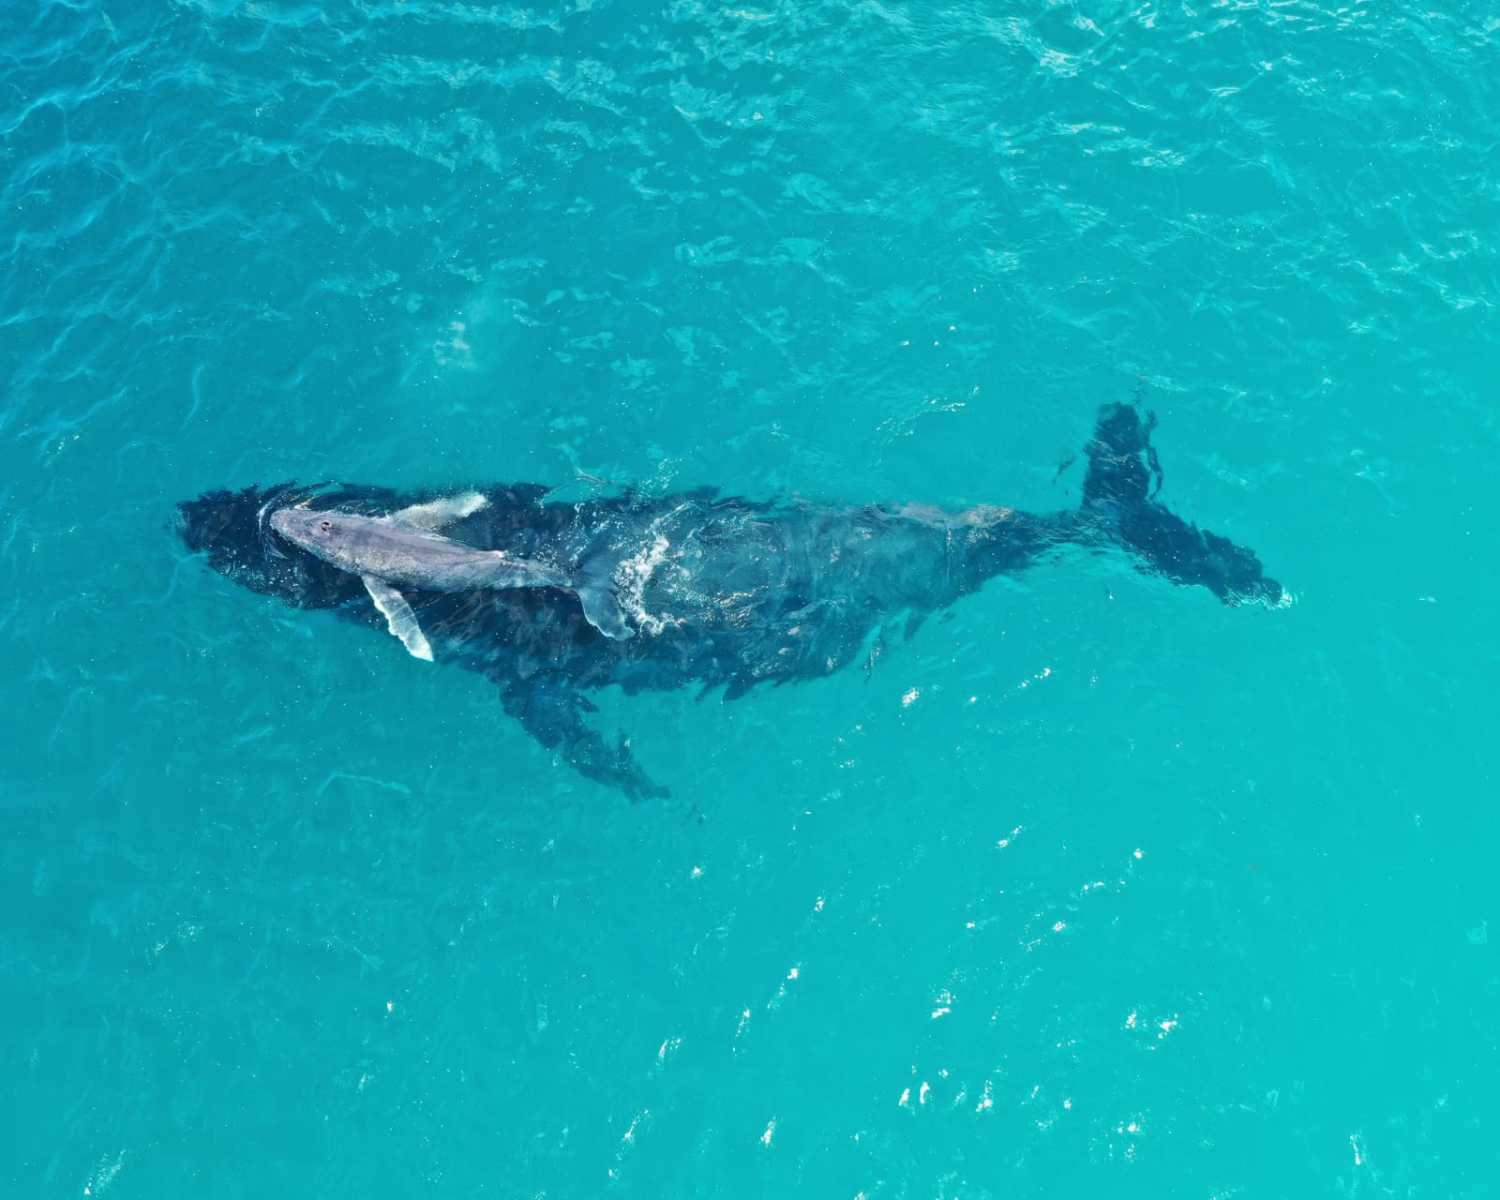 Baleine-a-bosse-et-son-petit_Atoll-dAldabra_Ocean-Indien©Christopher-Jones_Seychelles-Islands-Foundation